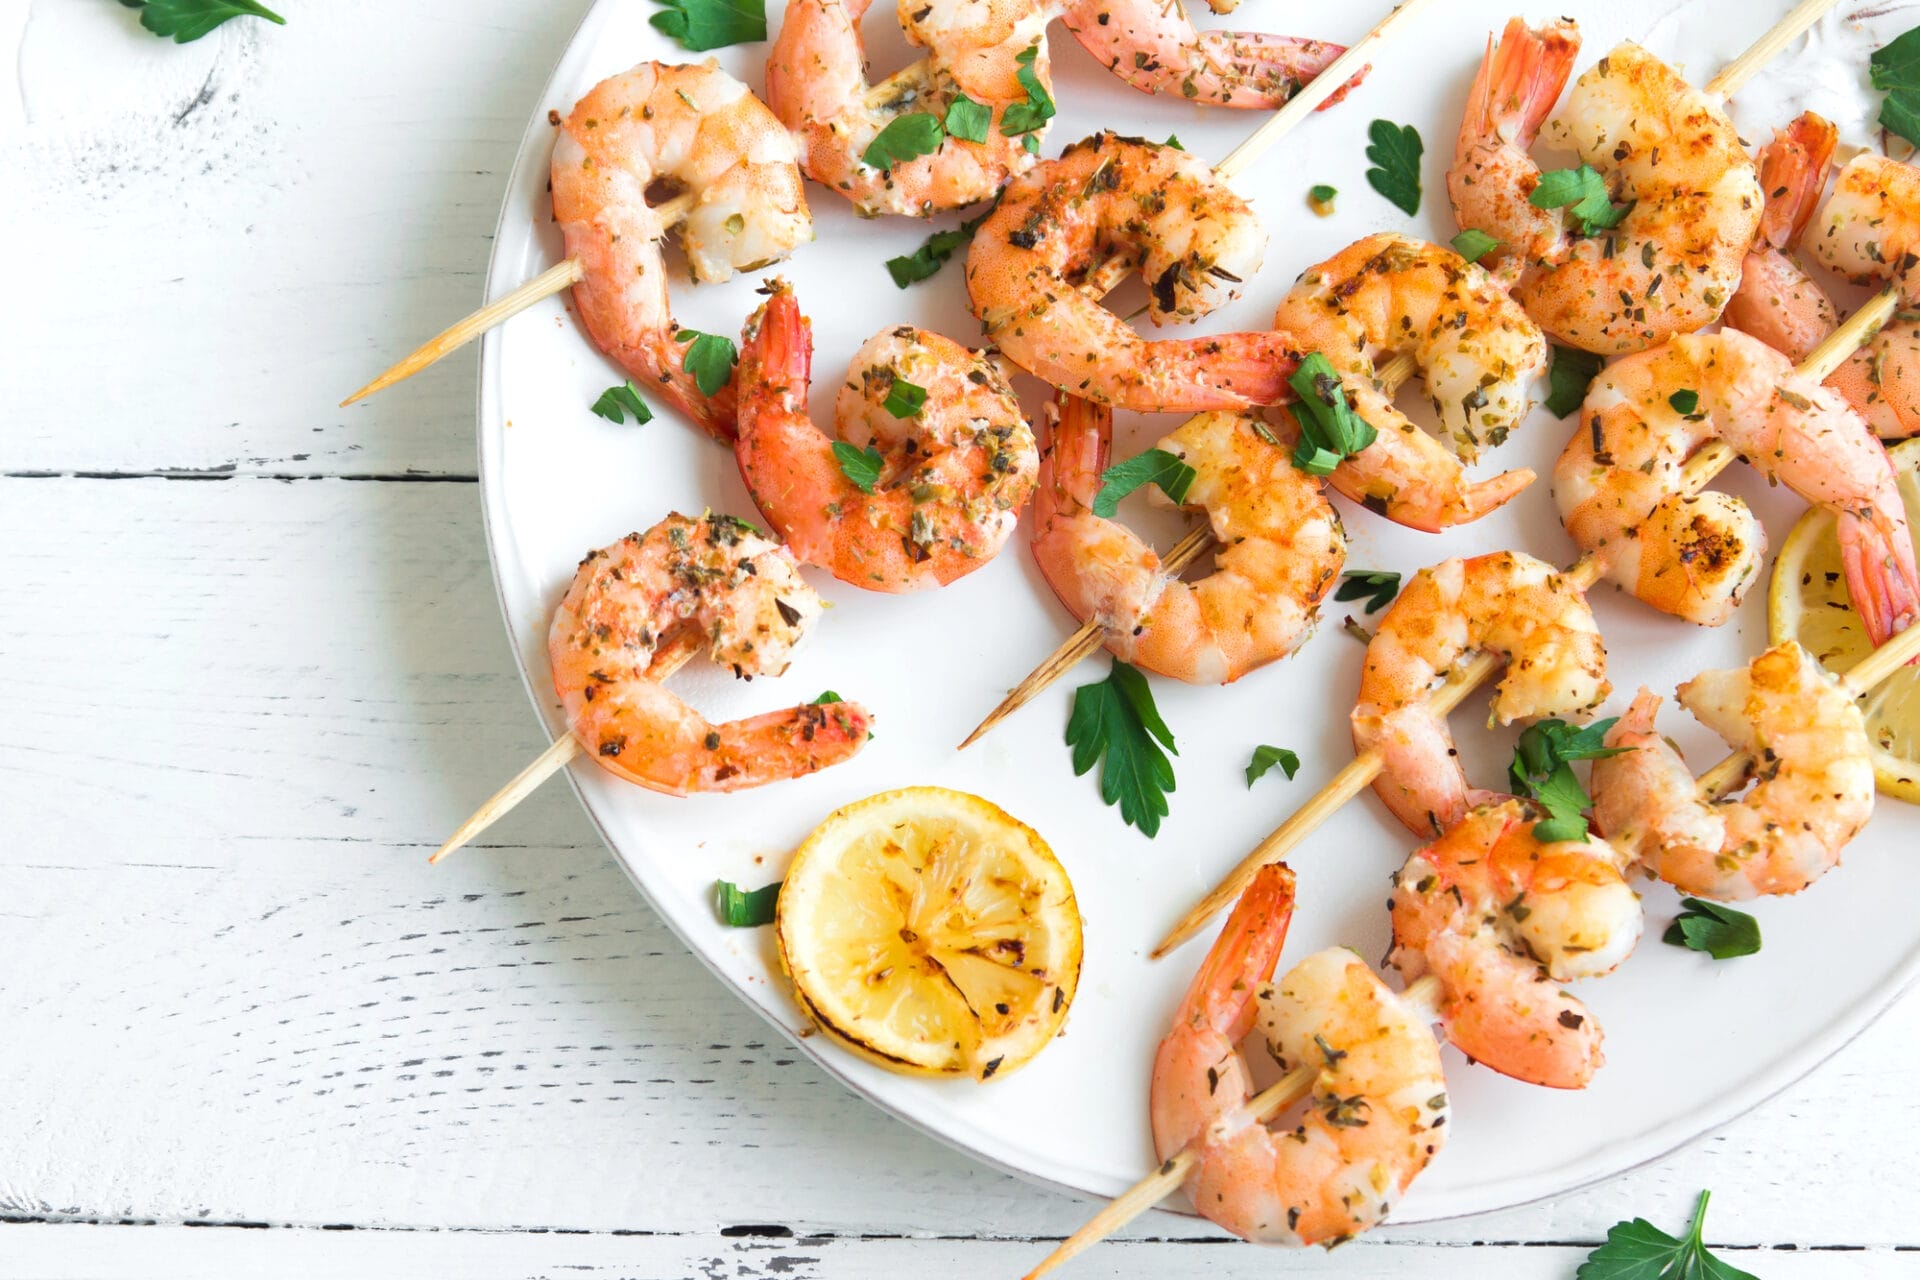 Grilled shrimp skewers with herbs and lemon slice